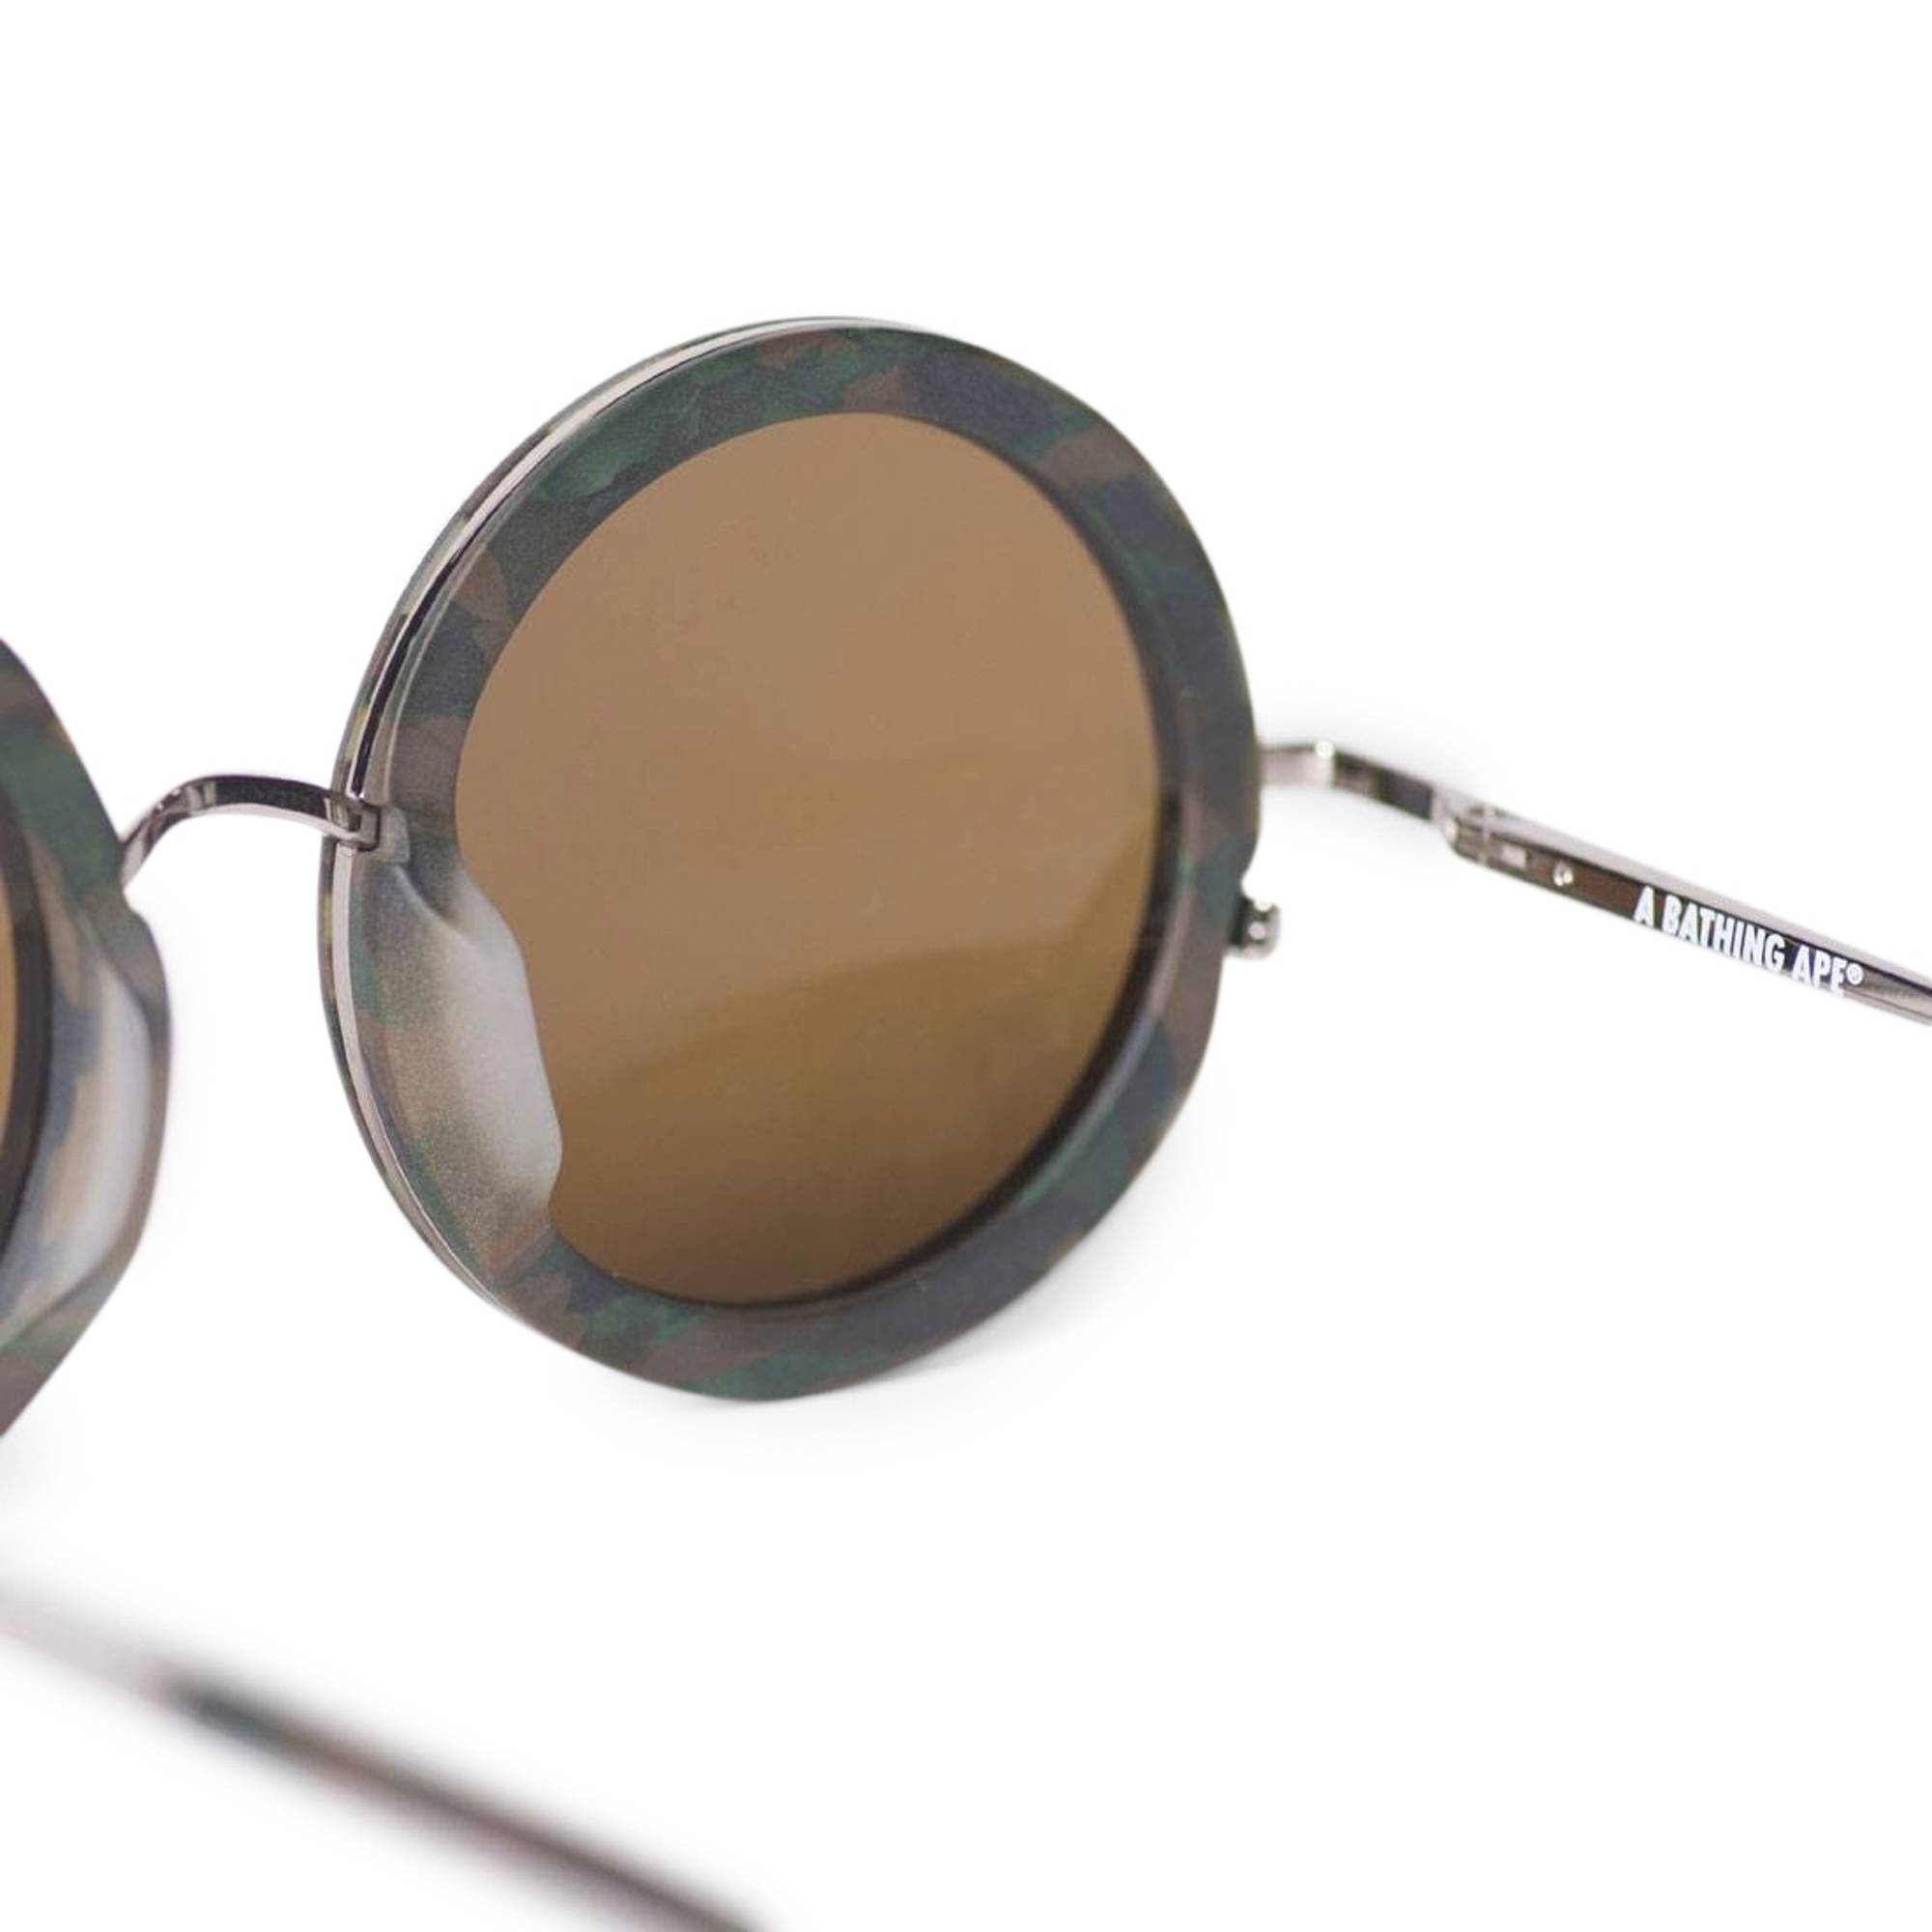 BAPE Sunglasses 'Camo' - 3